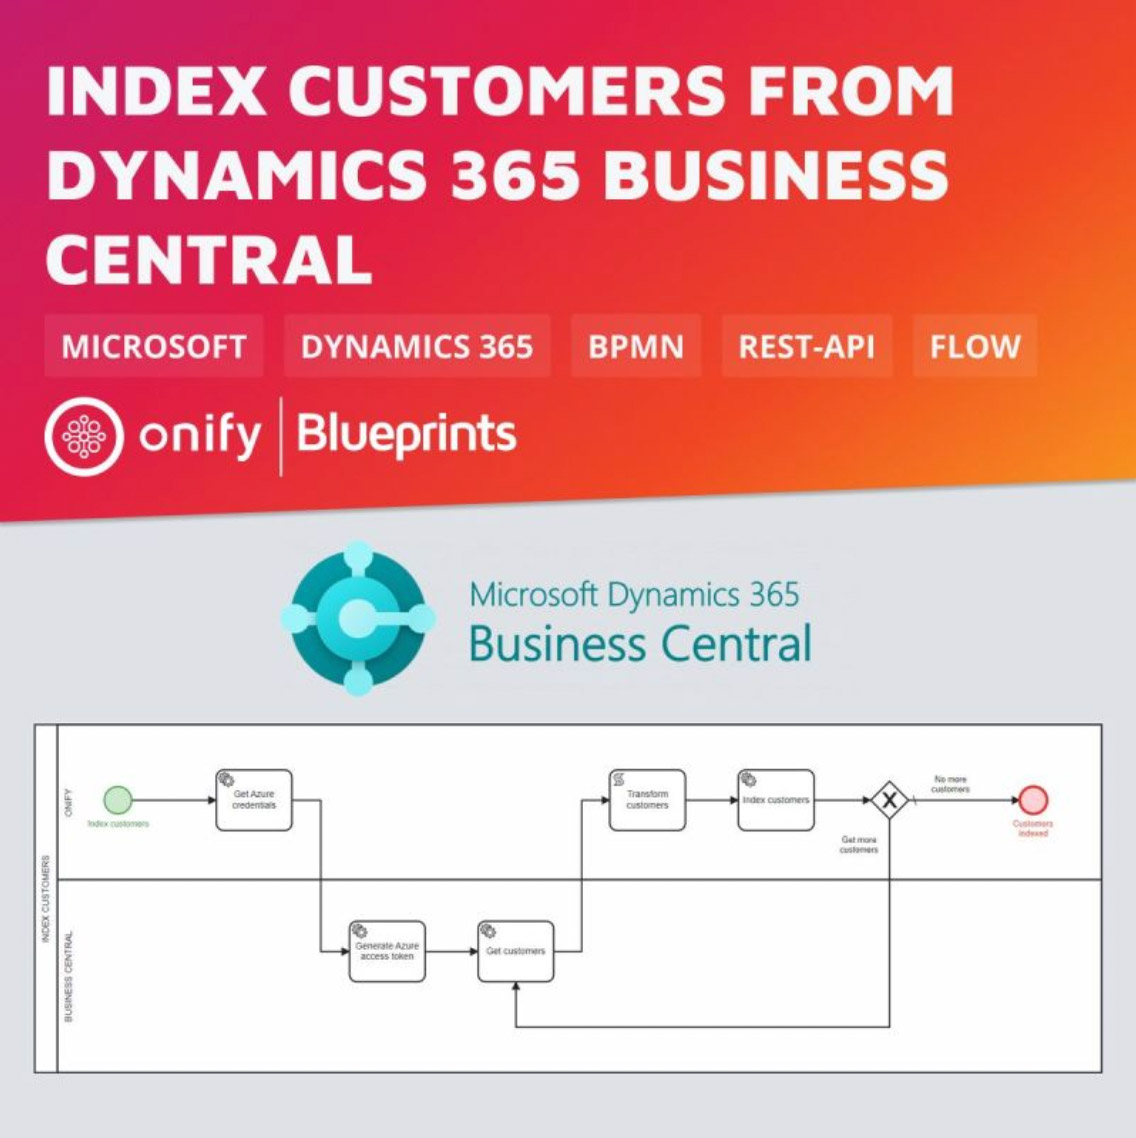 Onify Blueprint - Indeksiasiakkaat alkaen Dynamics 365 Business Central